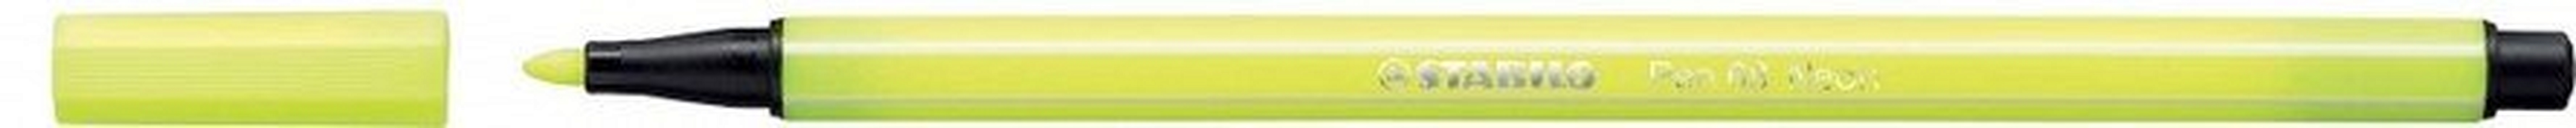 Фломастер Stabilo Pen 68, желтый - фото 1